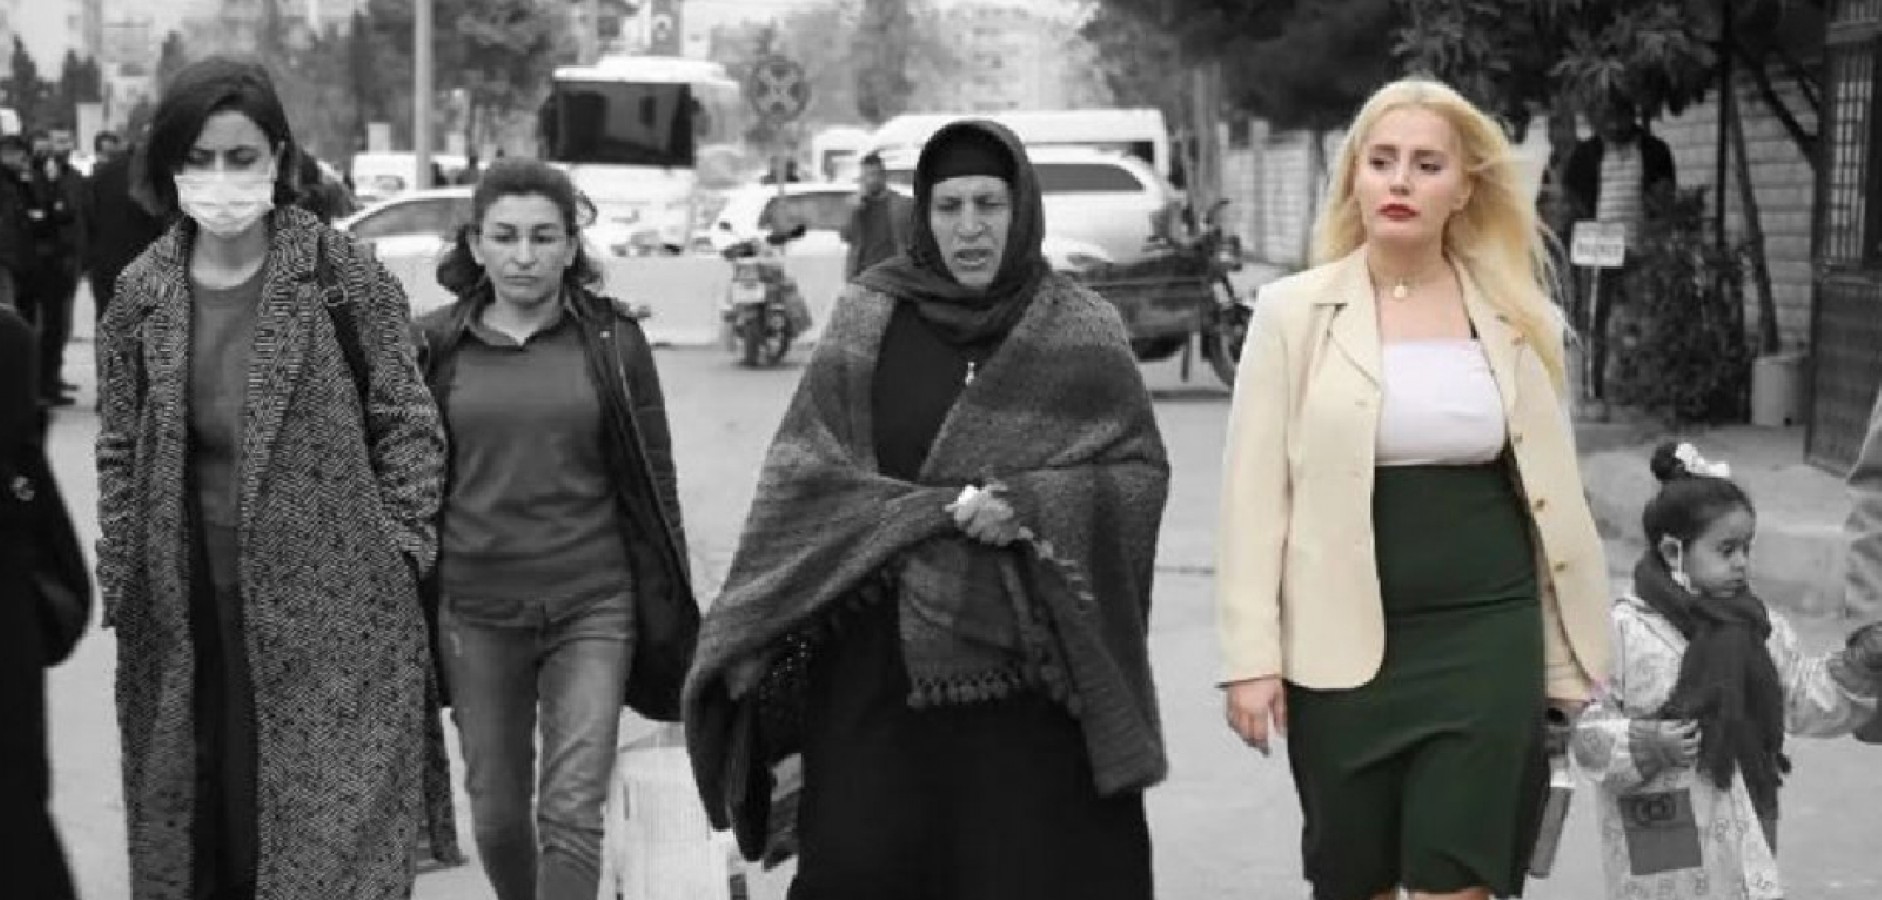 CHP Şanlıurfa Kadın Kolları Başkanı istifa etti!;